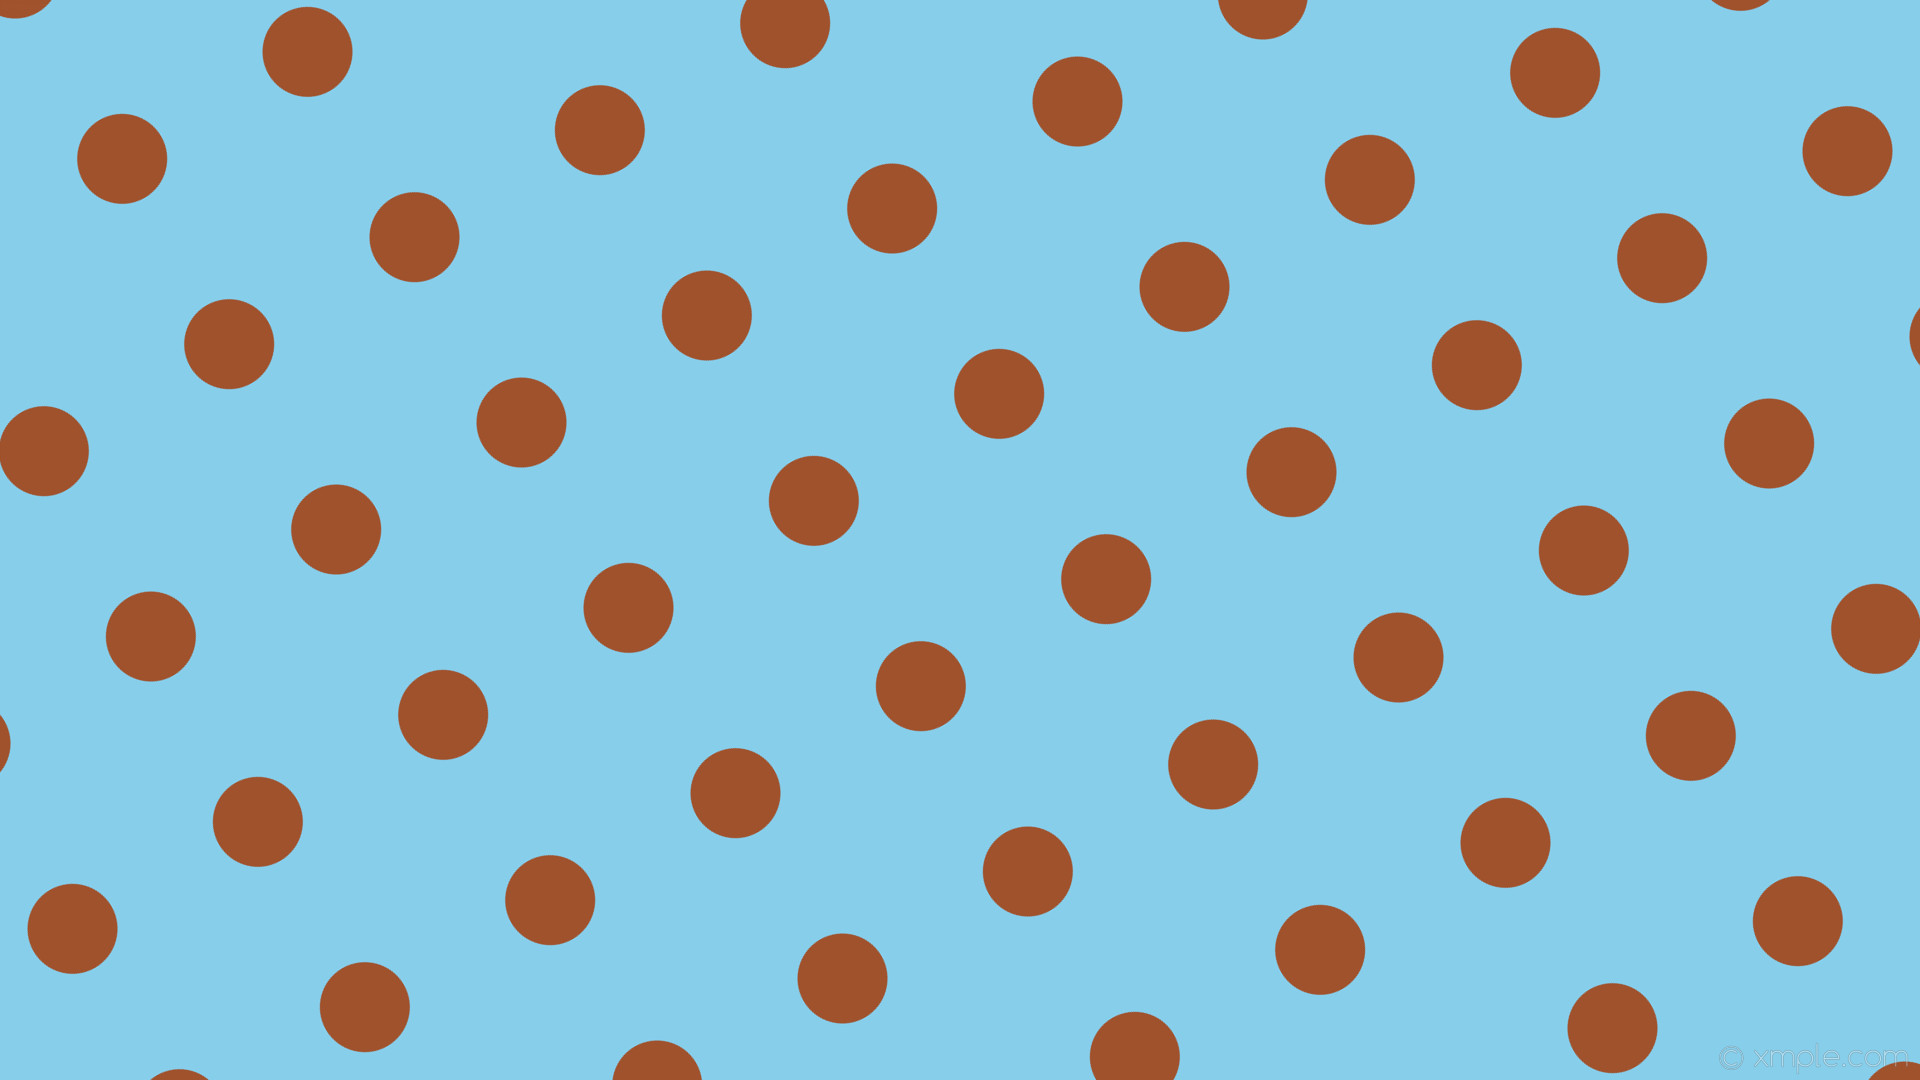 Wallpaper spots brown dots blue polka sky blue sienna ceeb #a0522d 210 90px